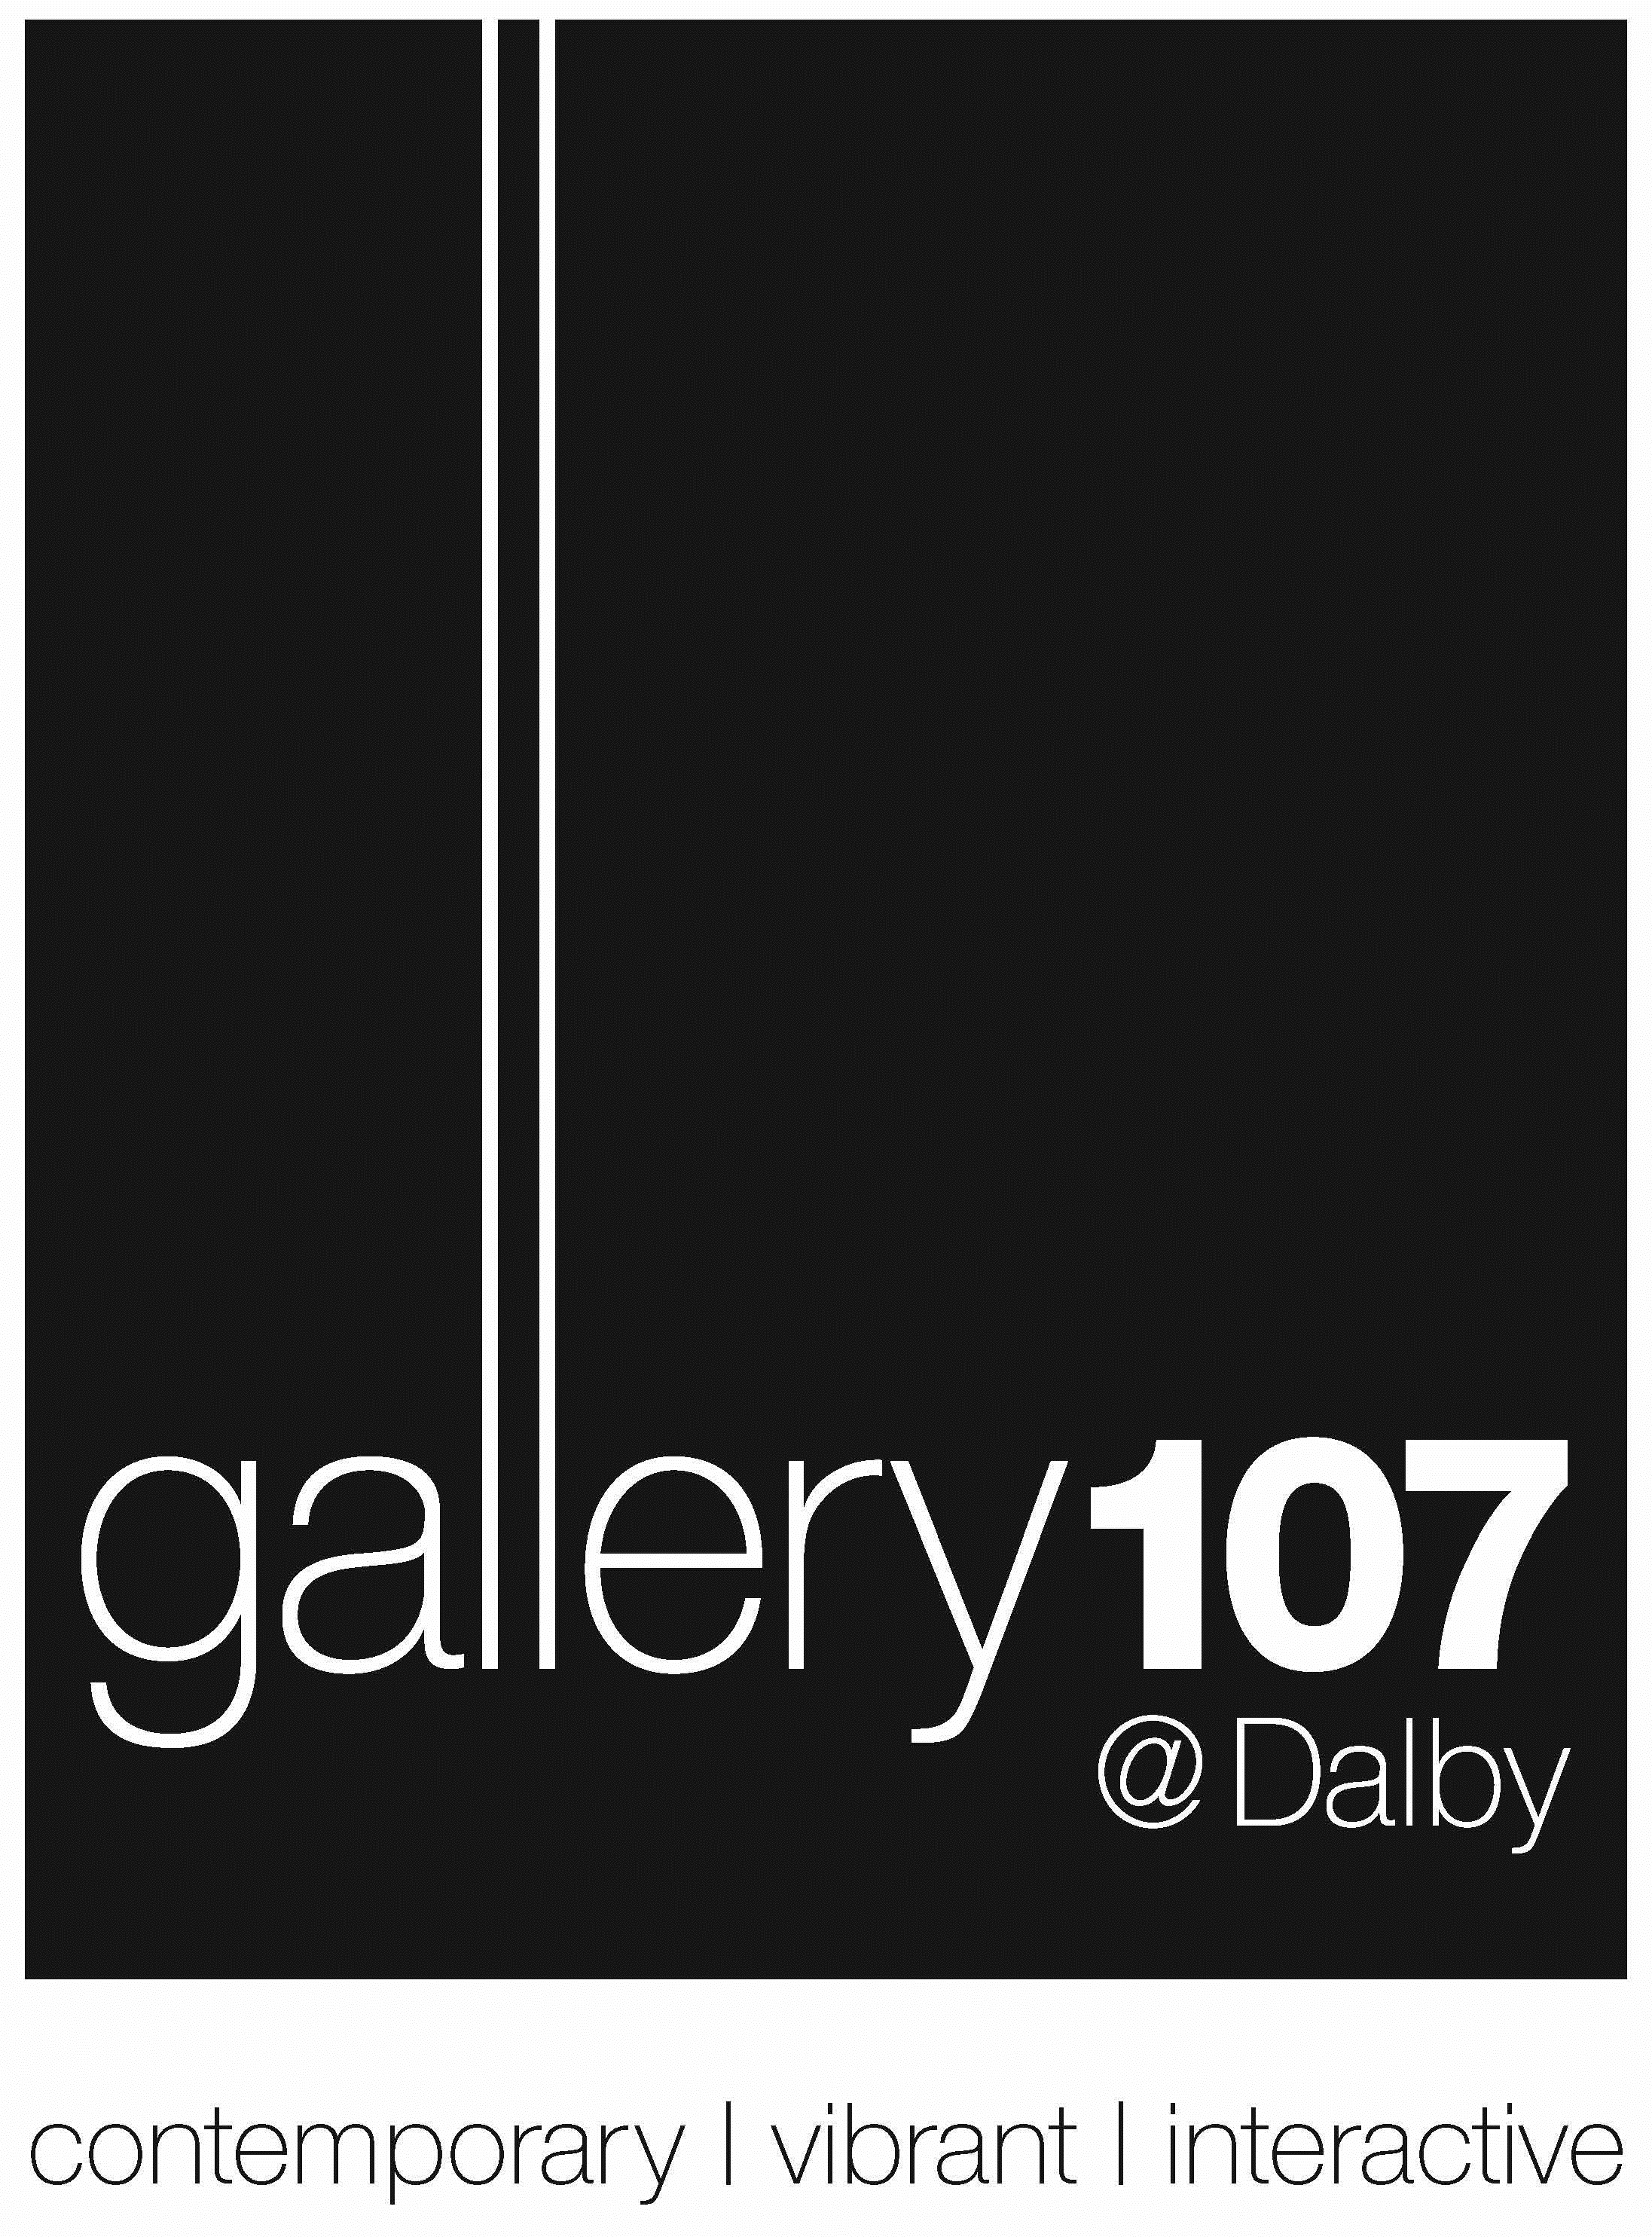 Gallery107Dalby